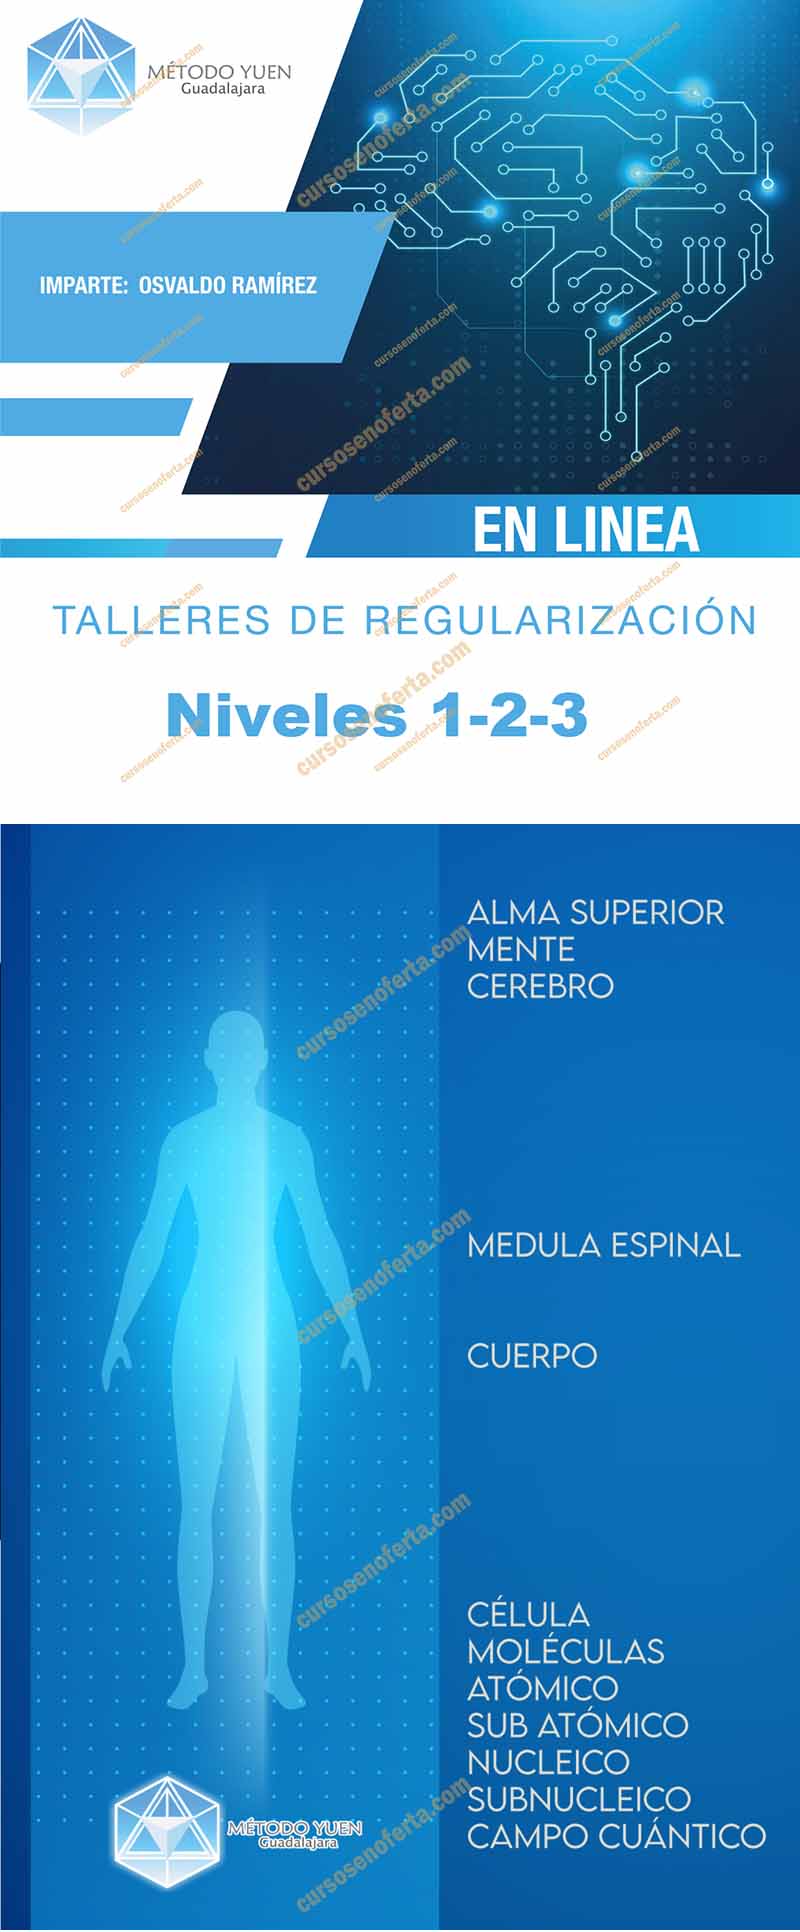 Método Yuen Guadalajara - Talleres de Regularización Niveles 1-2-3